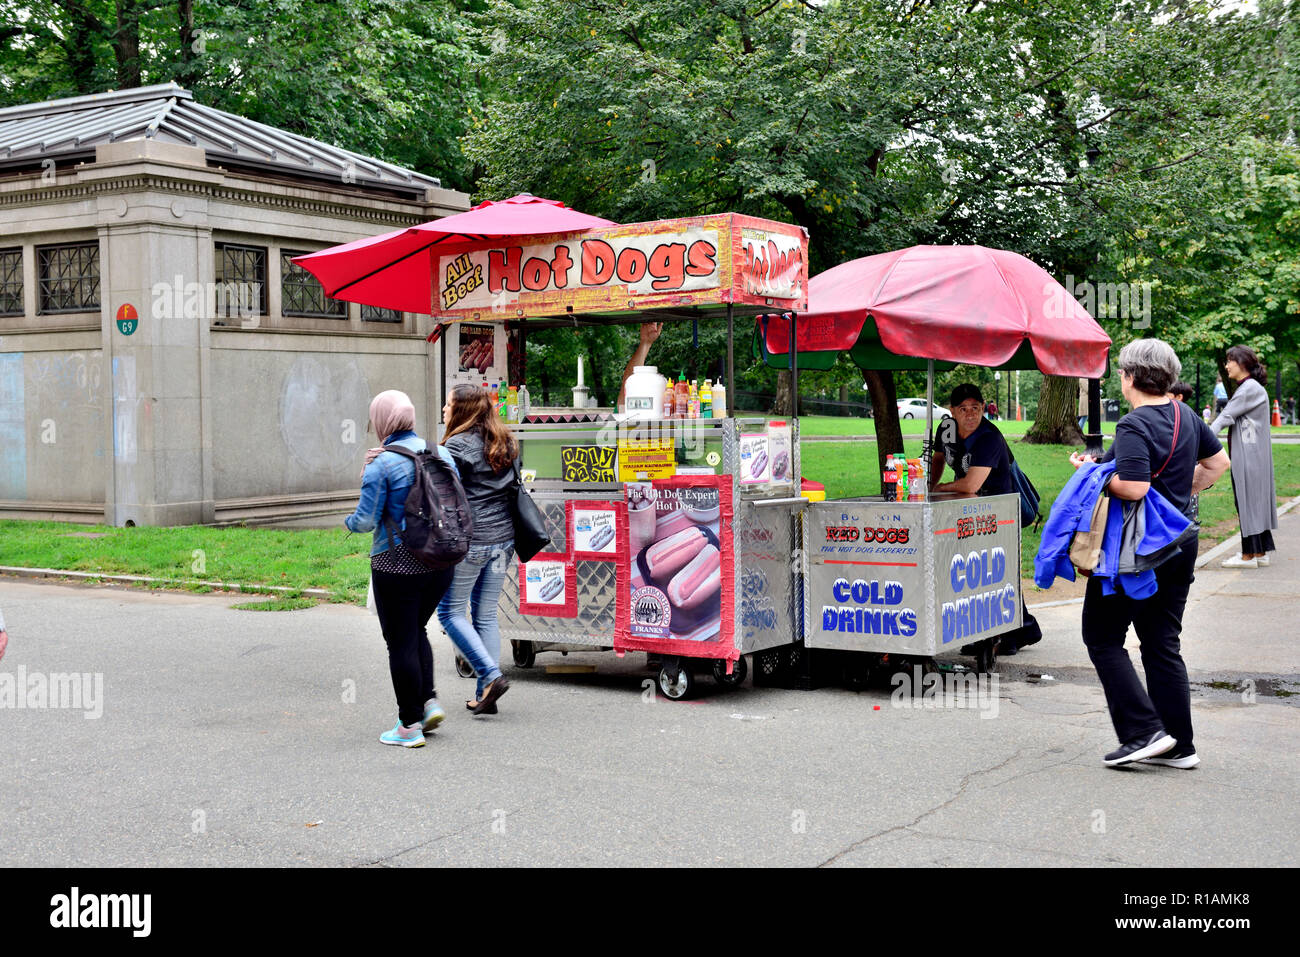 American mobile hot dog stall street vendor, by Boston Common park and garden, Boston MA, USA Stock Photo